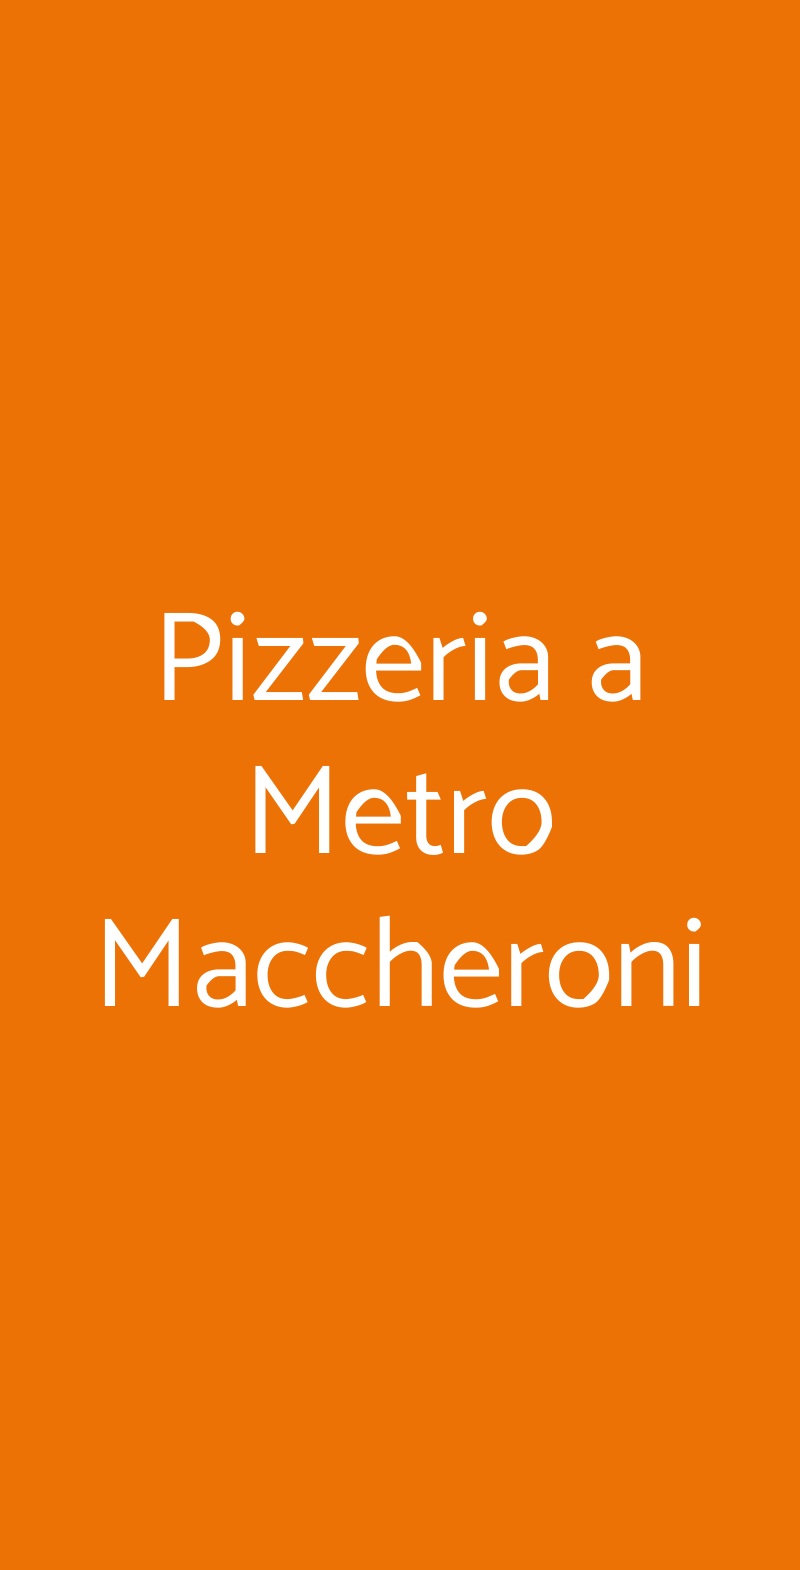 Pizzeria a Metro Maccheroni Bari menù 1 pagina